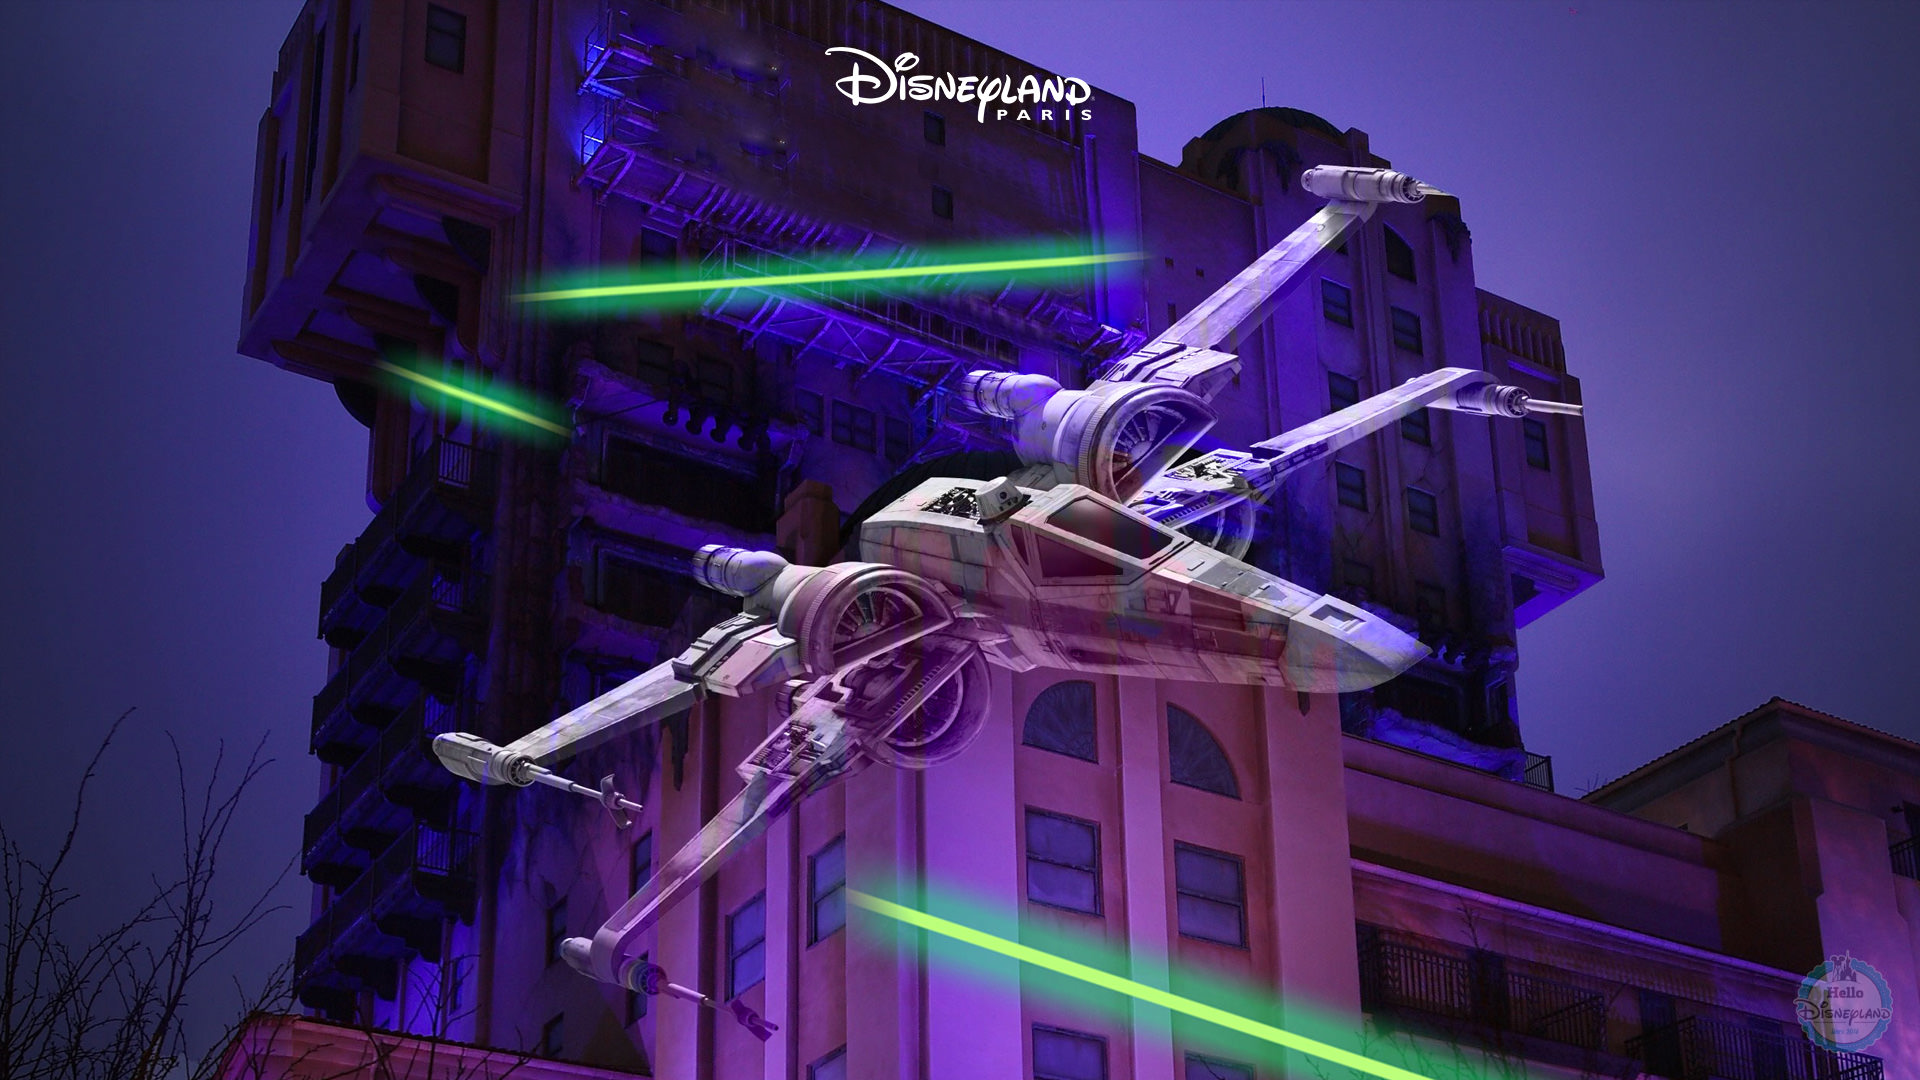 Season of the force Star Wars Disneyland Paris